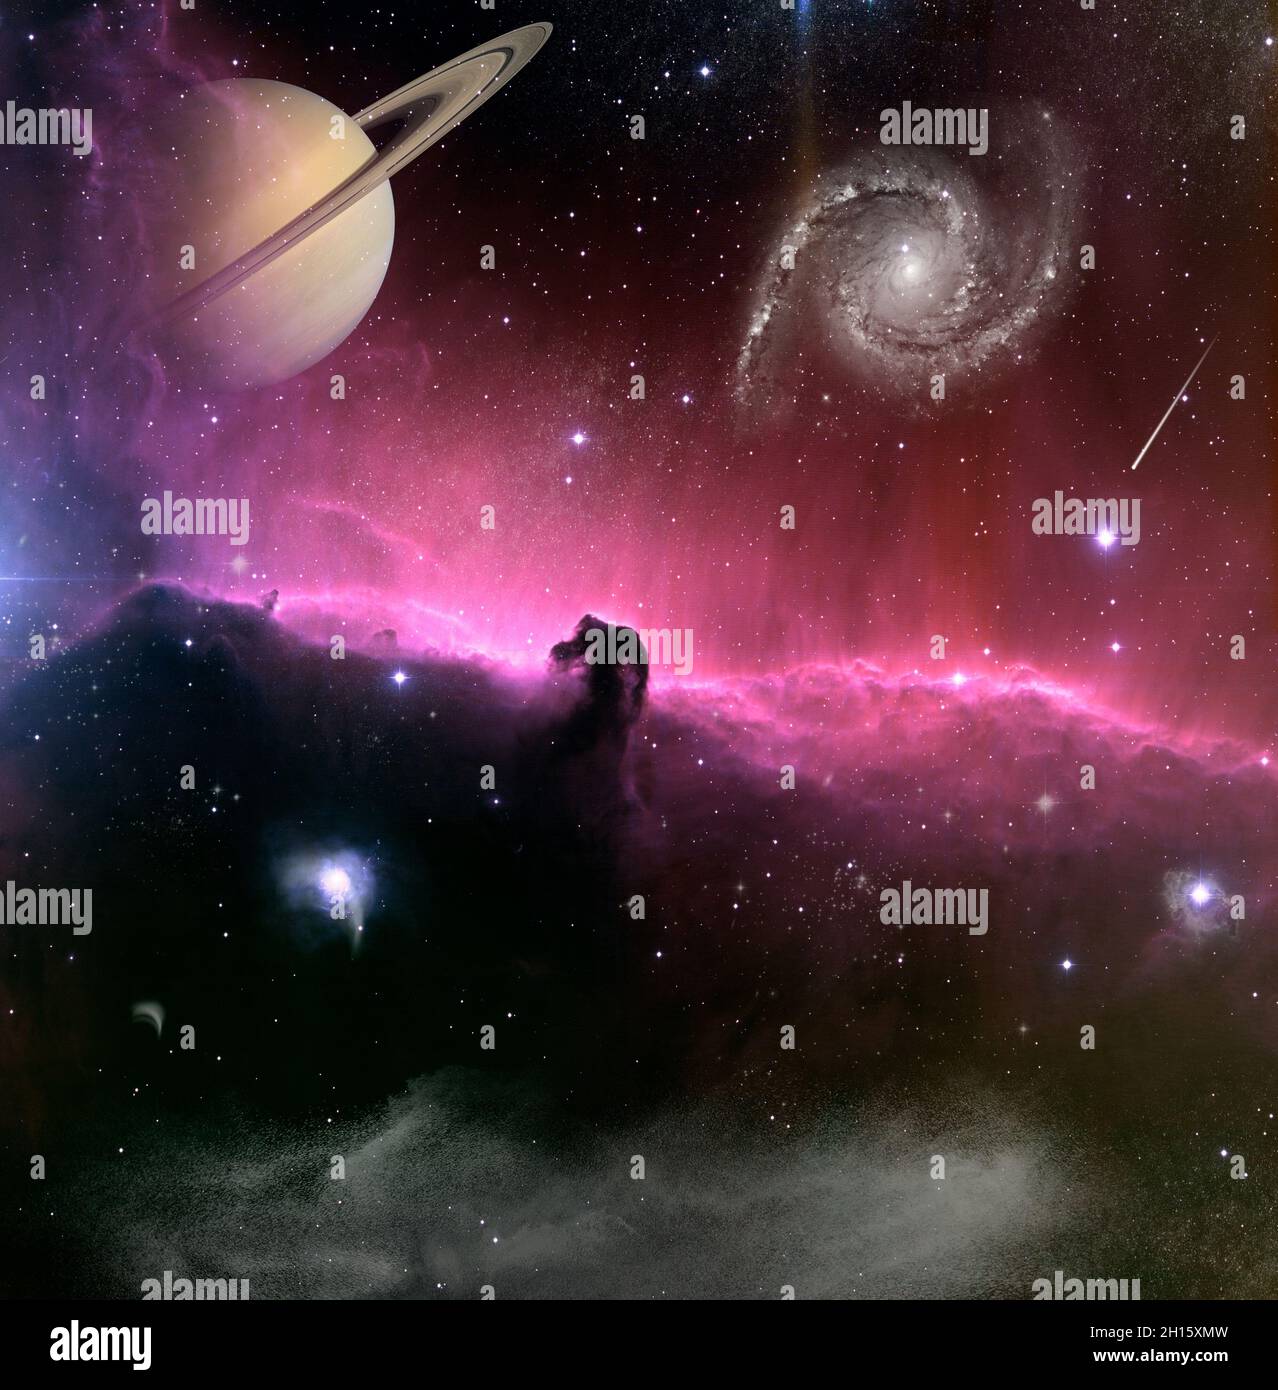 Cosmic art science fiction wallpaper, galaxies planets, horsehead hydrogen nebula  Stock Photo